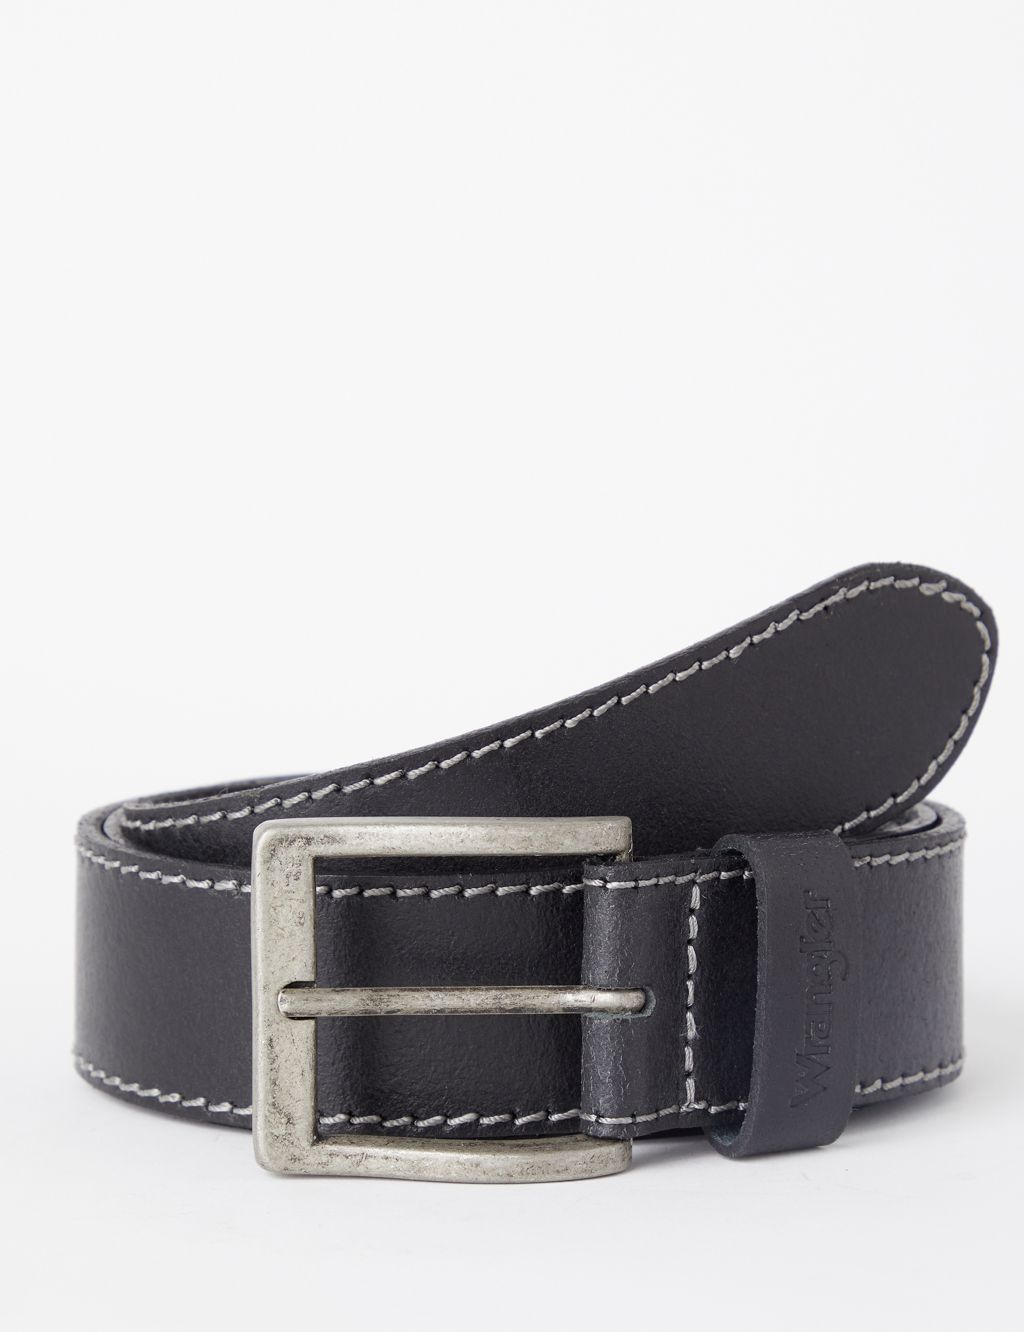 Leather Stitch Detail Belt image 2